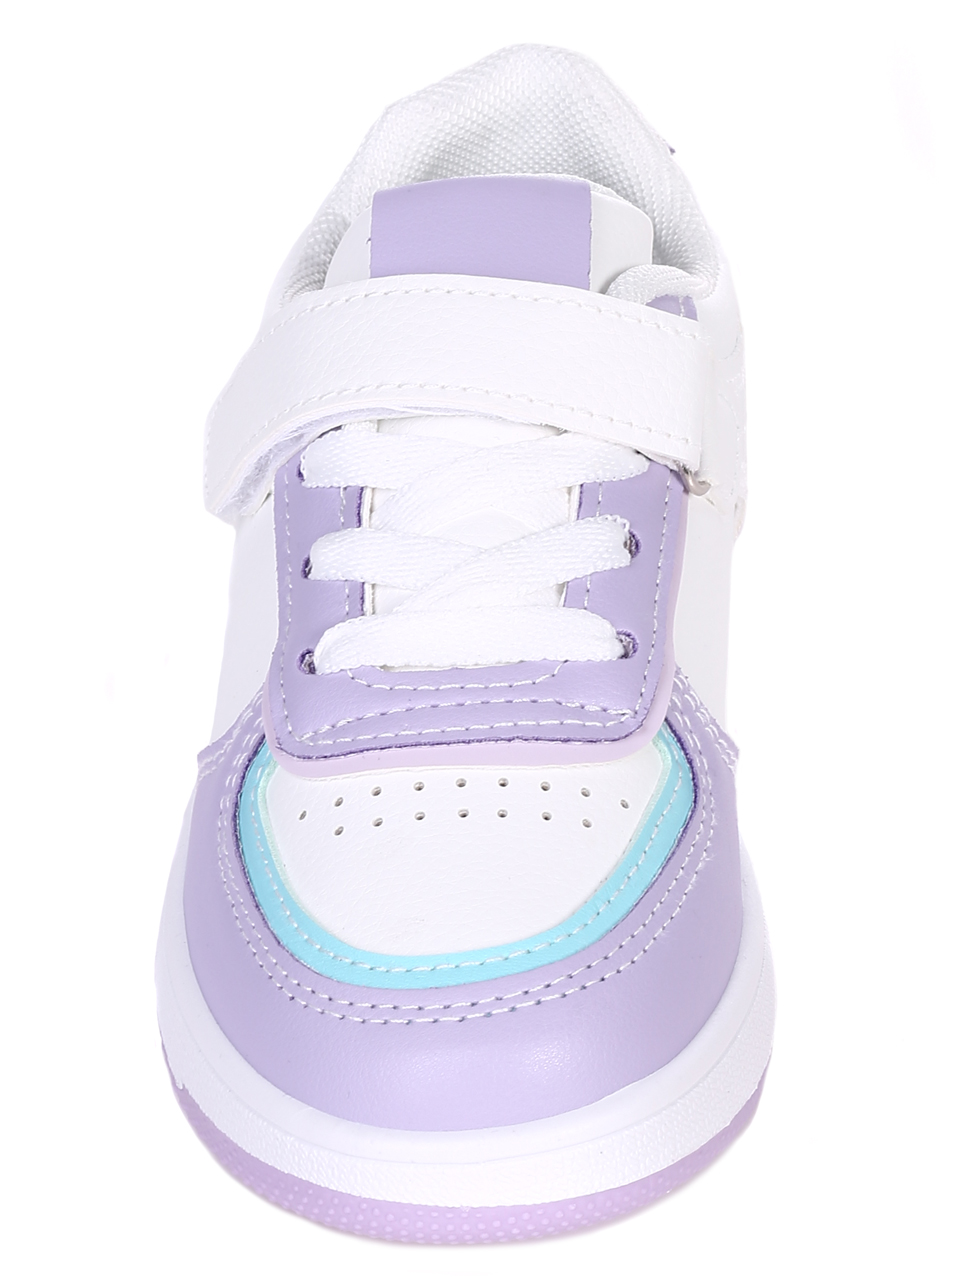 Ежедневни детски обувки в бяло и лилаво 18U-22001 white/purple